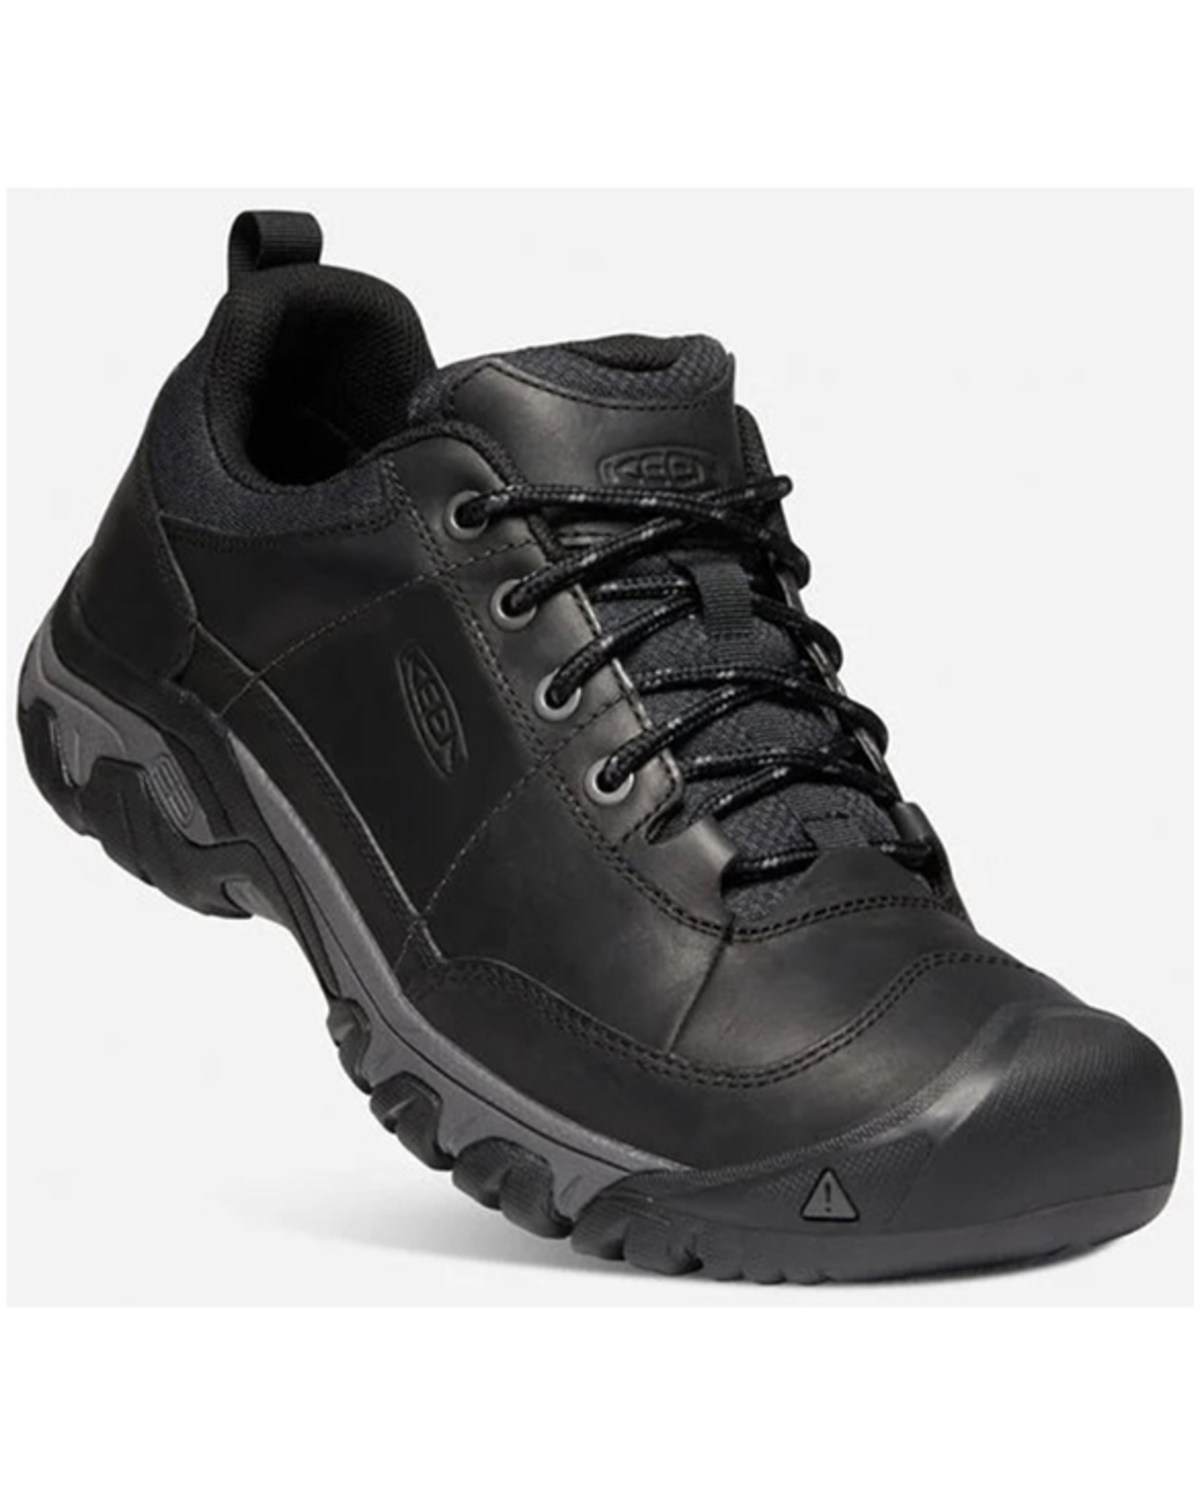 Keen Men's Targhee III Casual Hiking Boots - Soft Toe